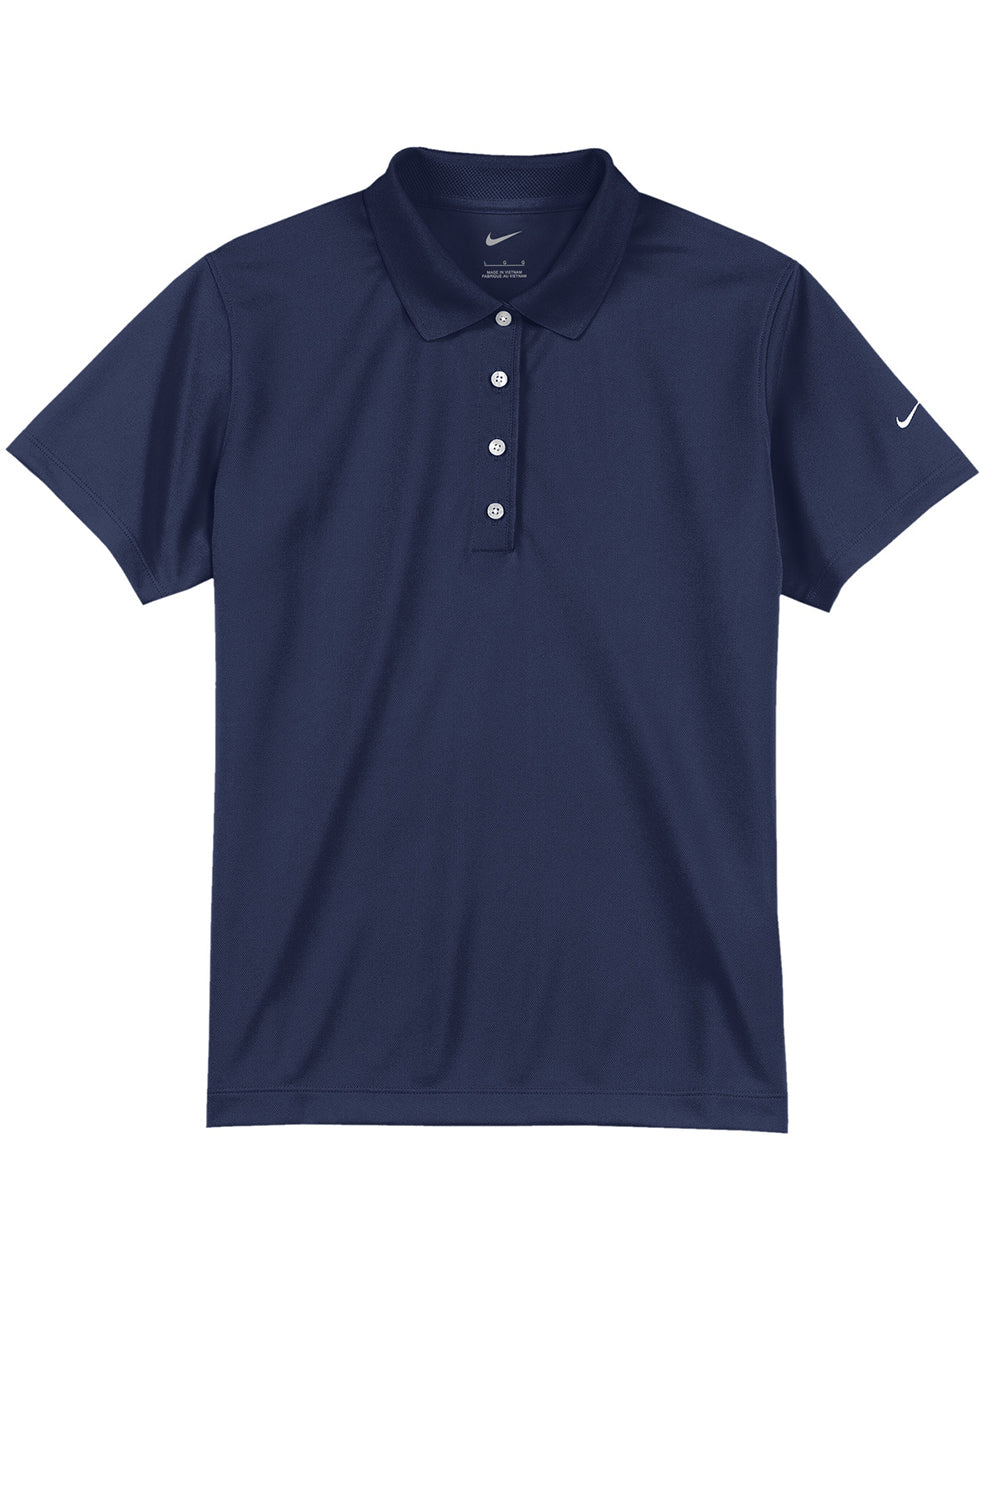 Nike 203697 Womens Tech Basic Dri-Fit Moisture Wicking Short Sleeve Polo Shirt Midnight Navy Blue Flat Front